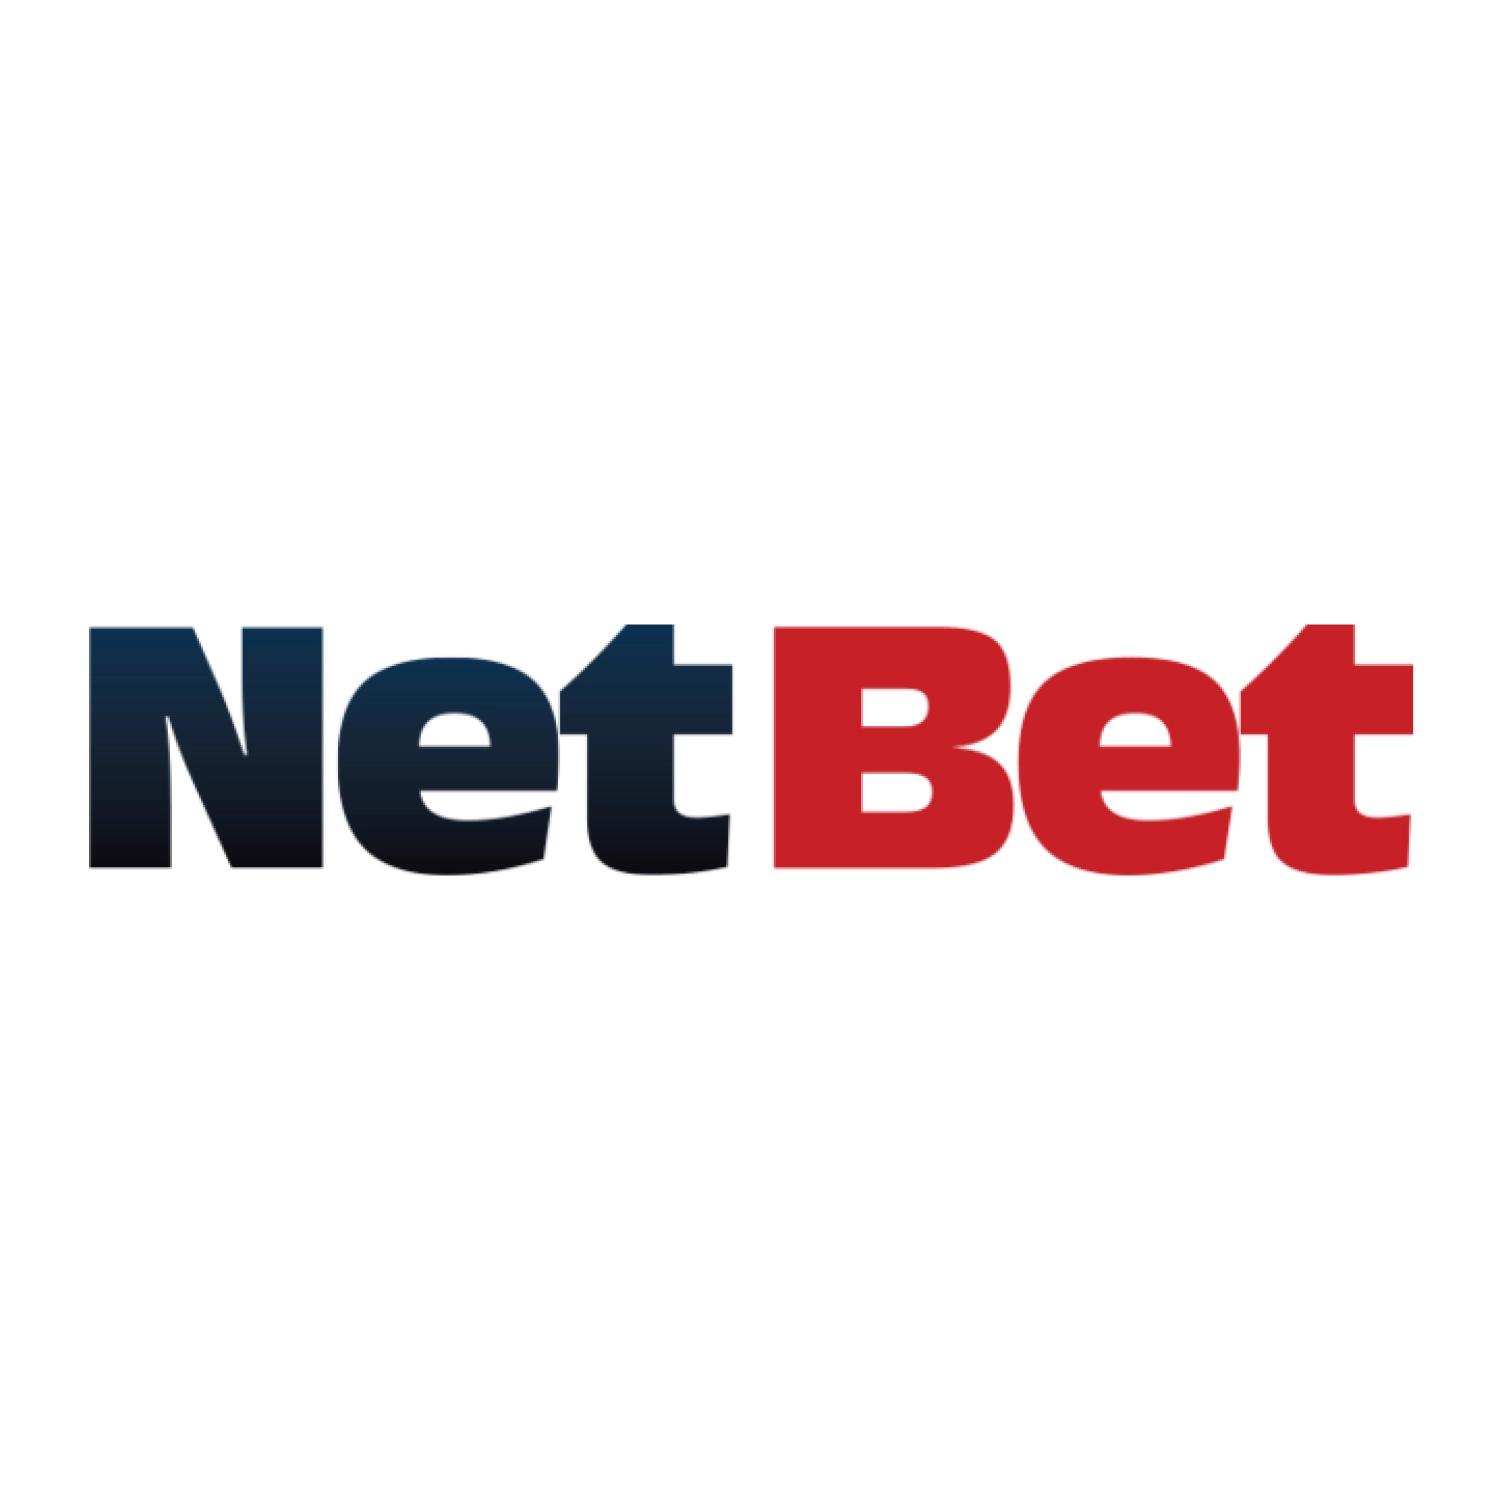 Netbet casino logo rotund 1500x1500 alb